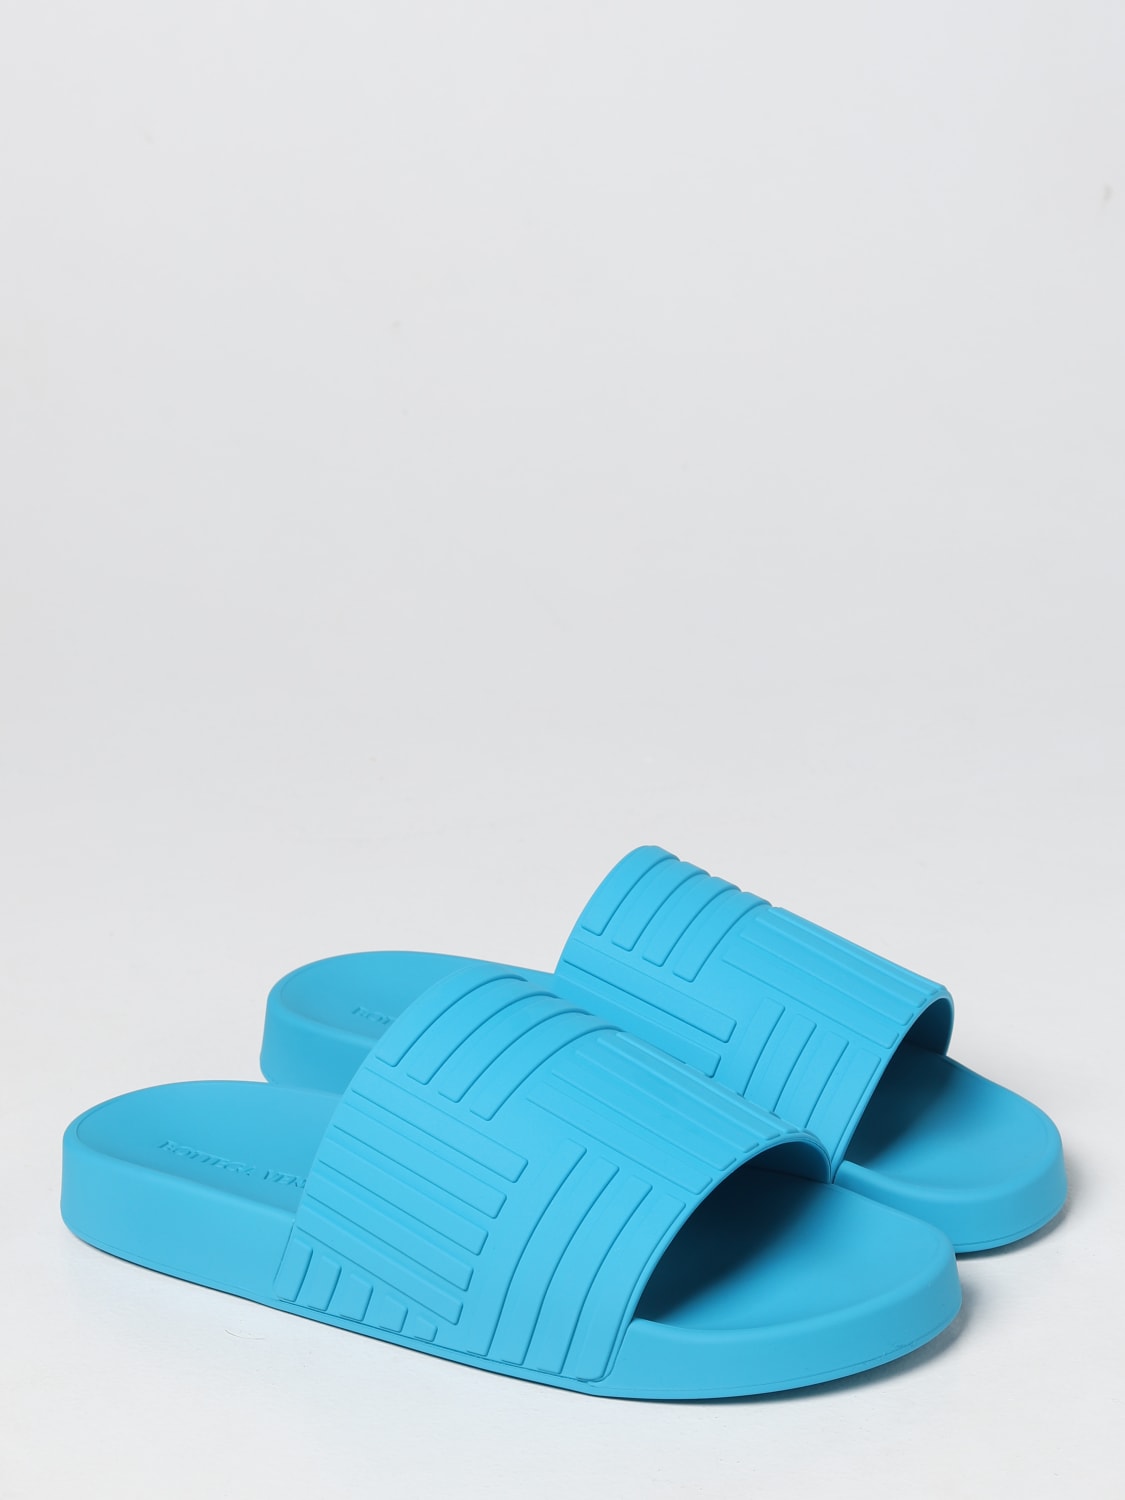 Bottega Veneta rubber sandals